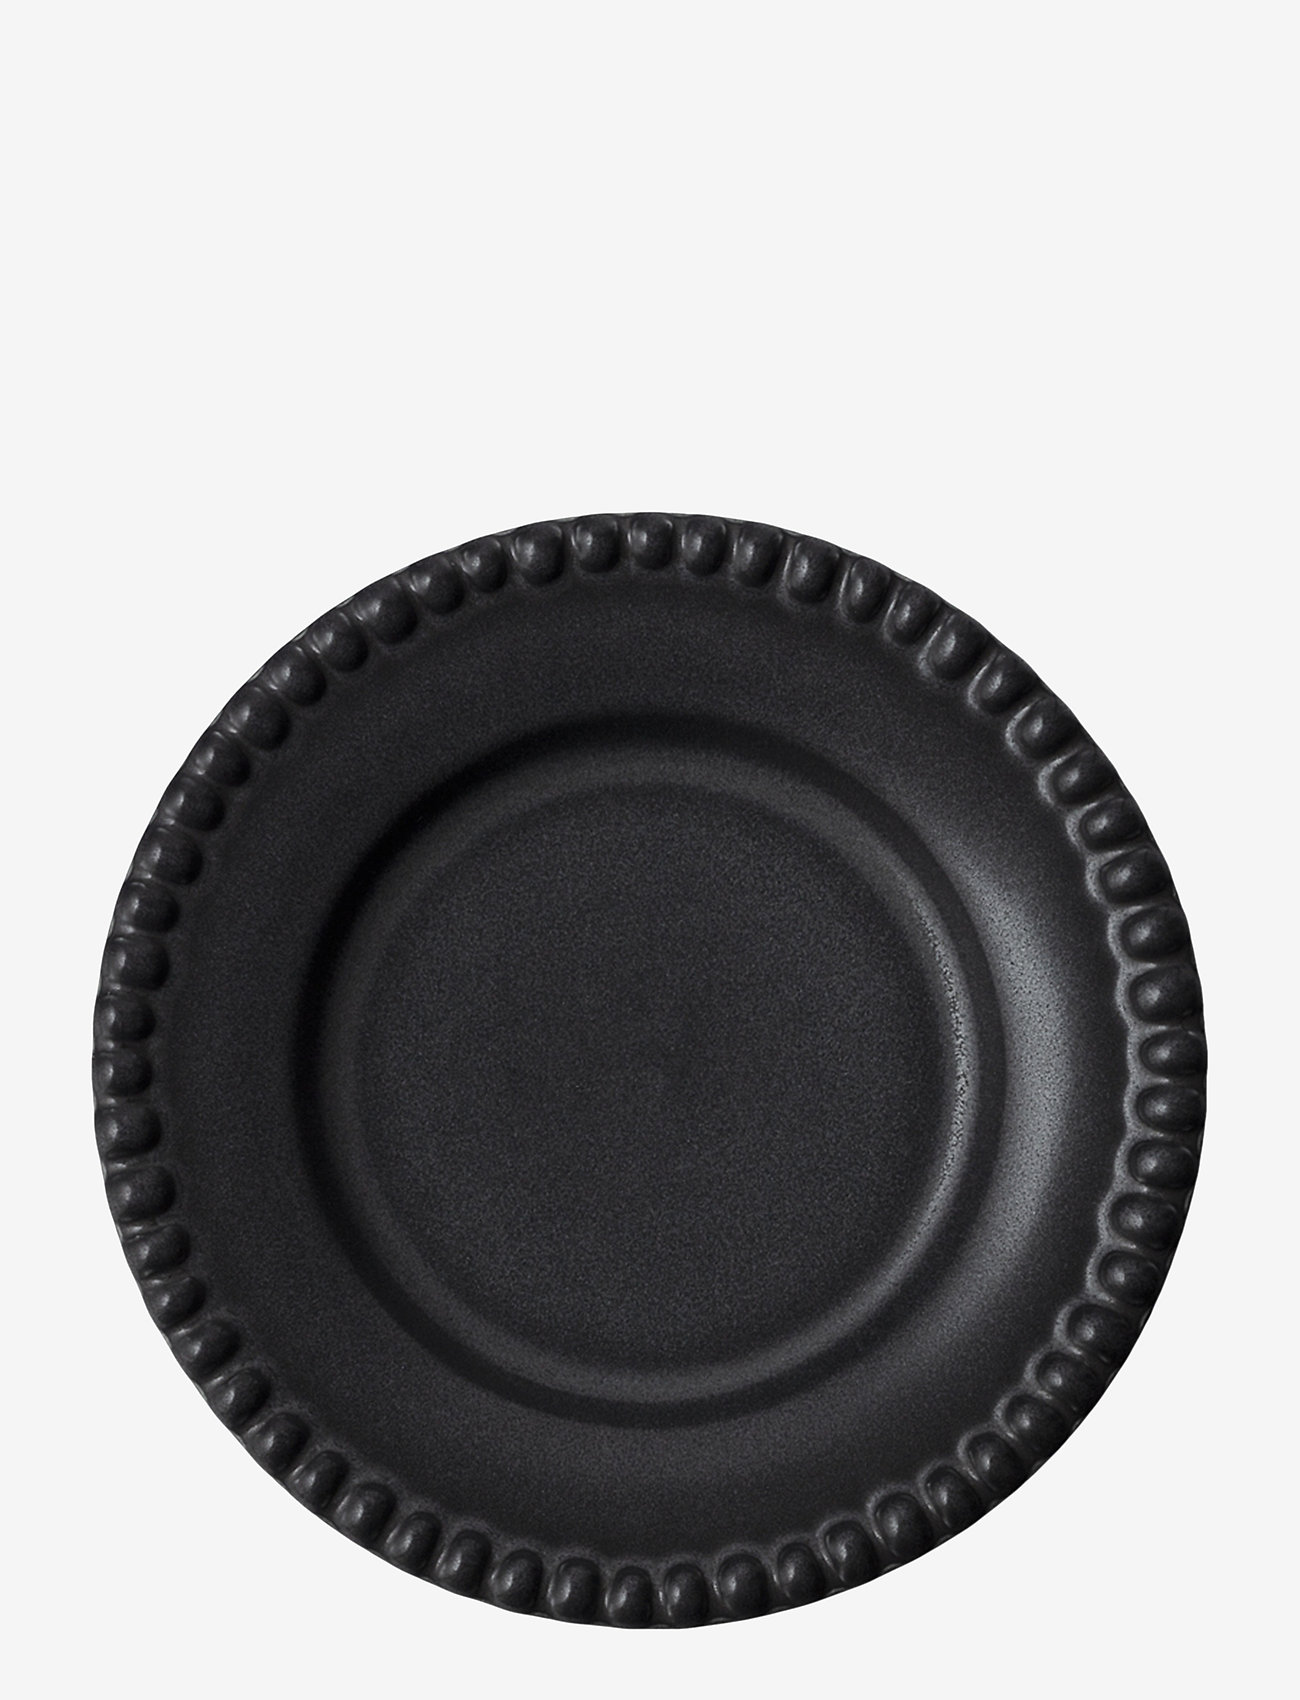 PotteryJo - DARIA breadplate 18 cm stoneware 2-pack - small plates - ink black - 0